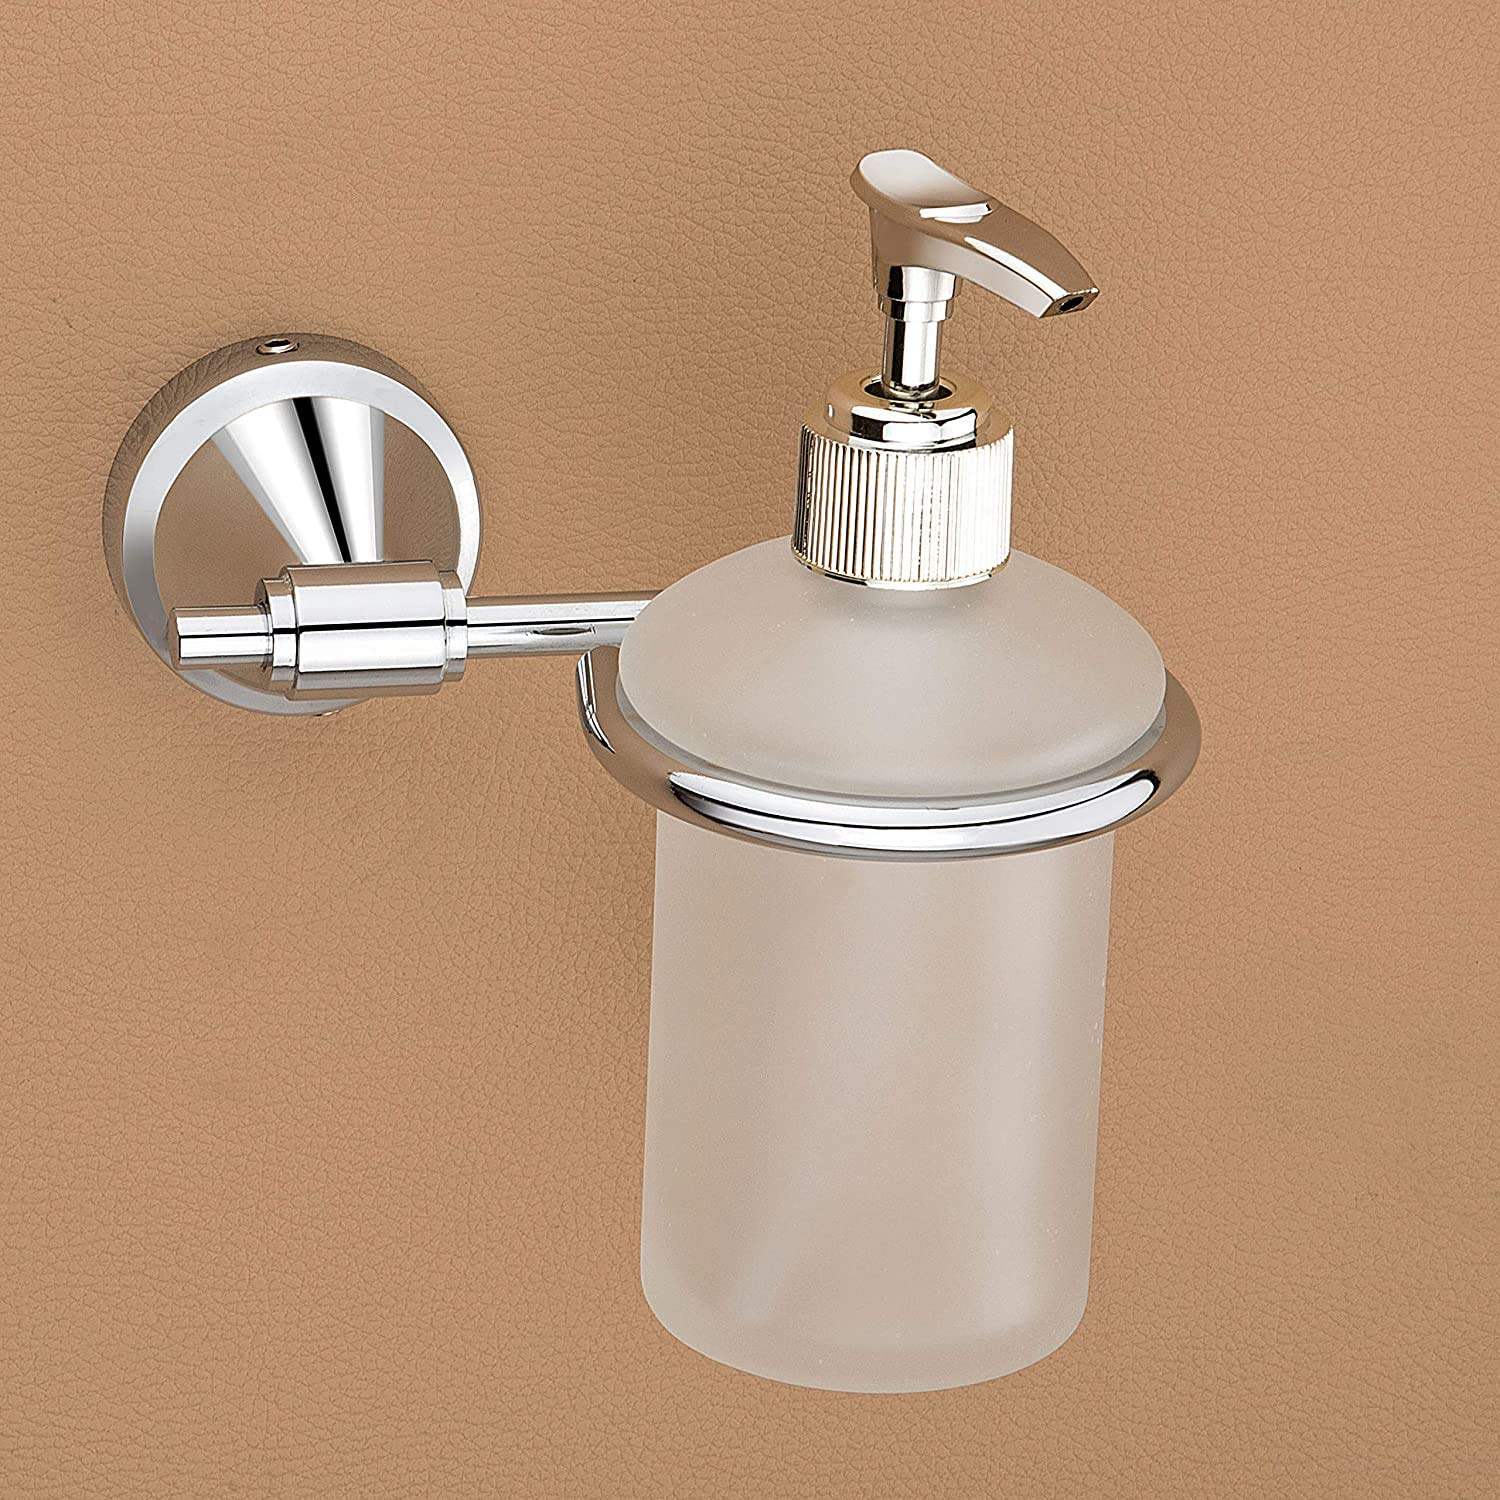 Plantex Stainless Steel 304 Grade Niko Liquid Soap Dispenser/Shampoo Dispenser/Hand Wash Dispenser/Bathroom Accessories(Chrome) - Pack of 2